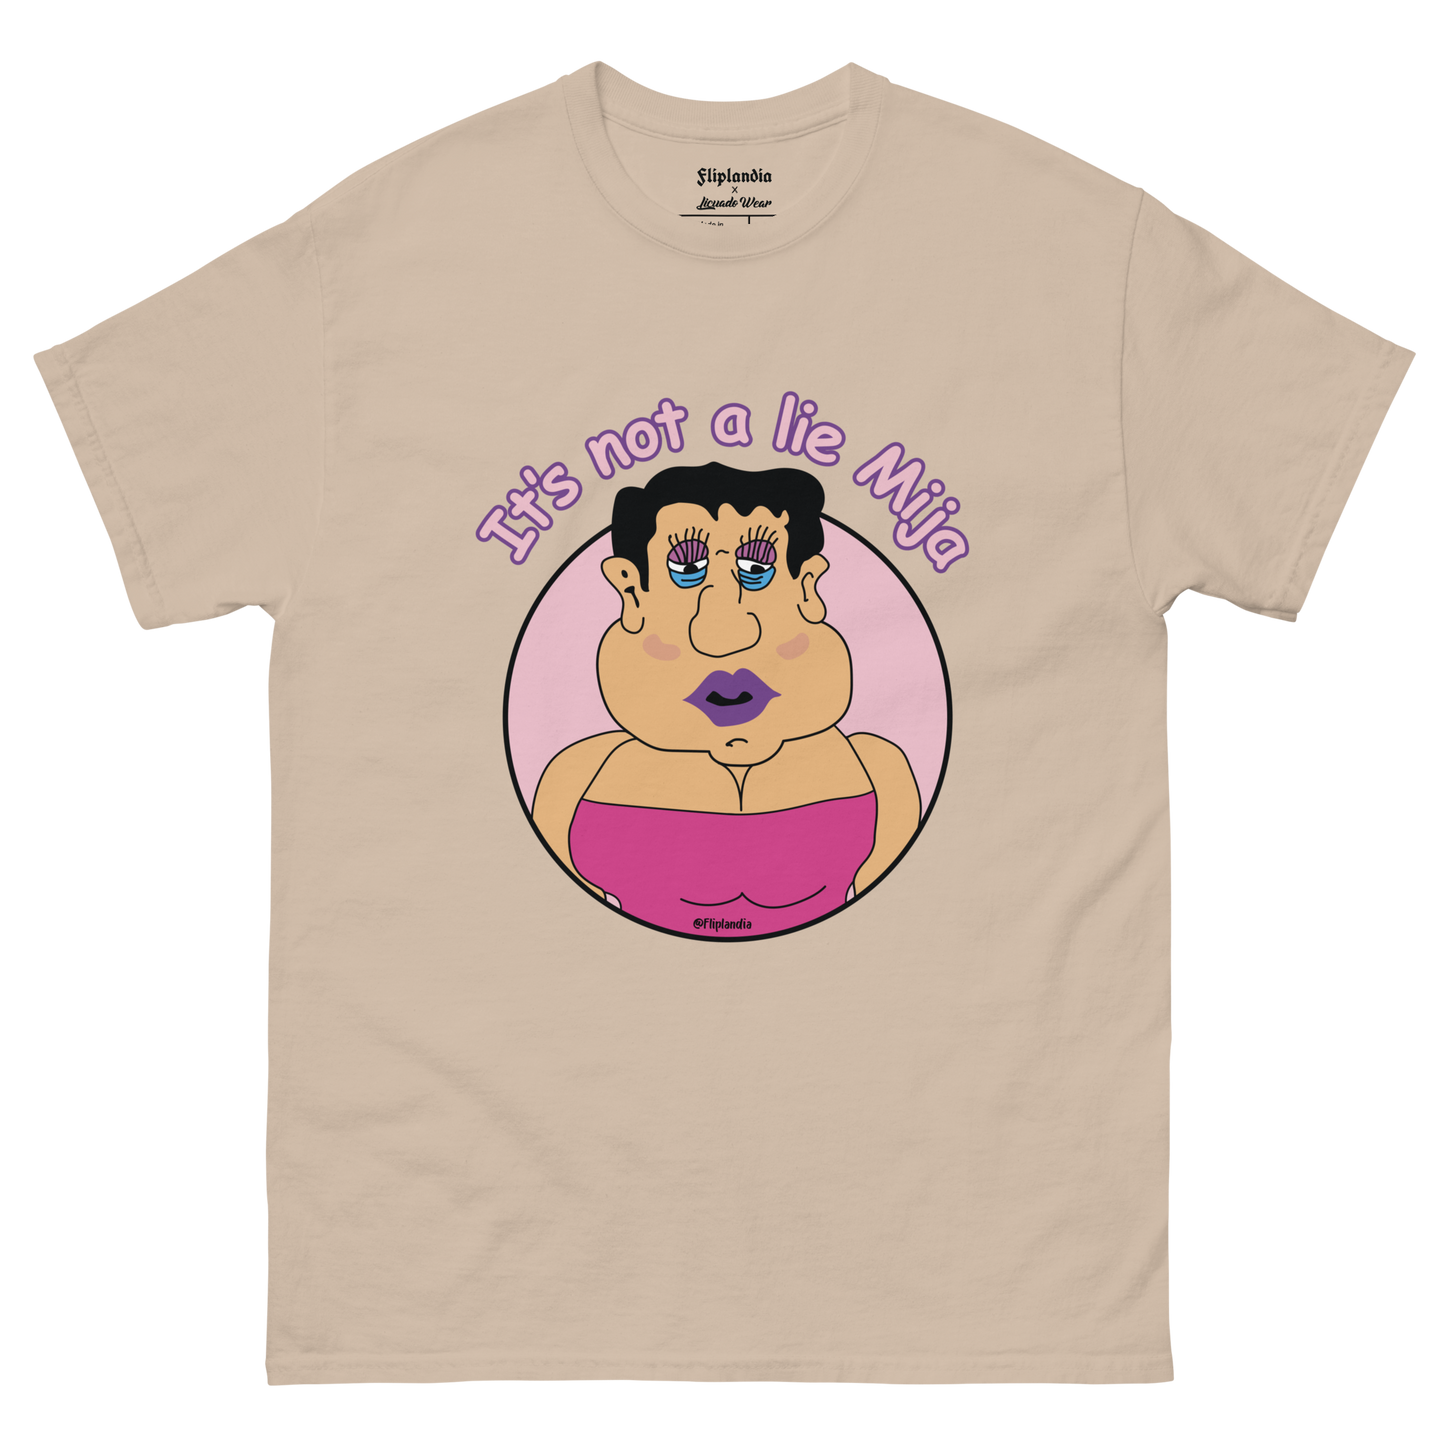 La Betty Boo (It's not a lie Mija) - Fliplandia Unisex T-shirt